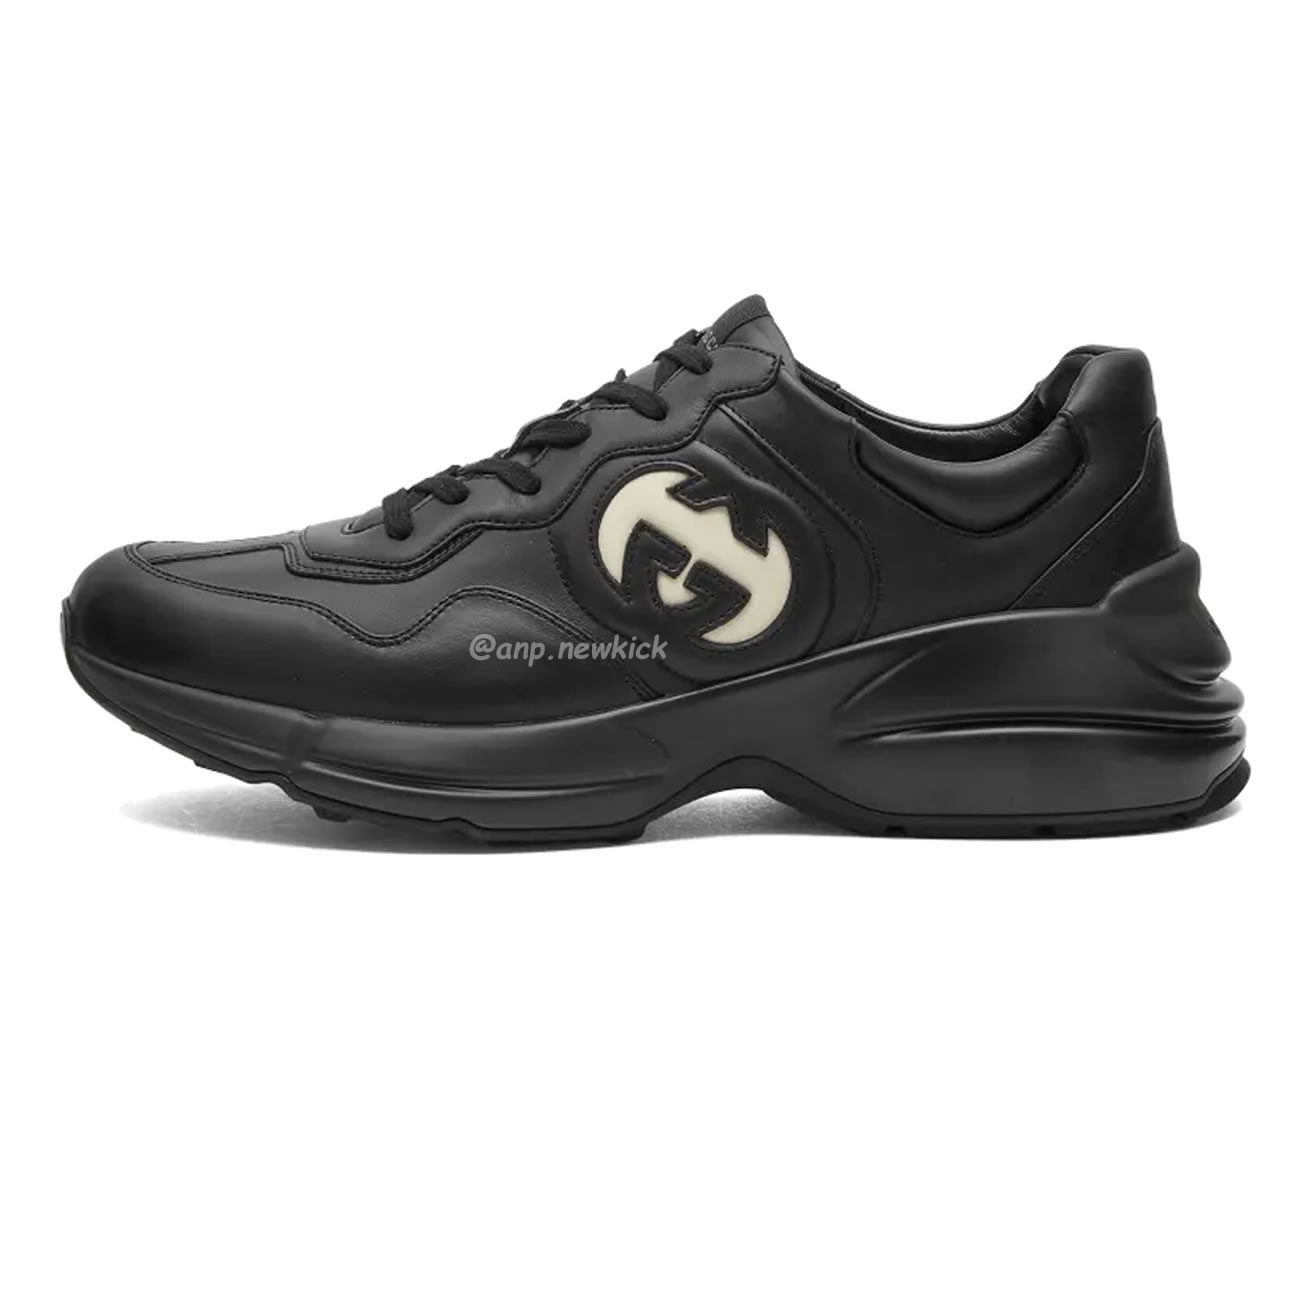 Gucci Rhyton Interlocking G Sneaker Black White 757857 Upg70 9567 (10) - newkick.org